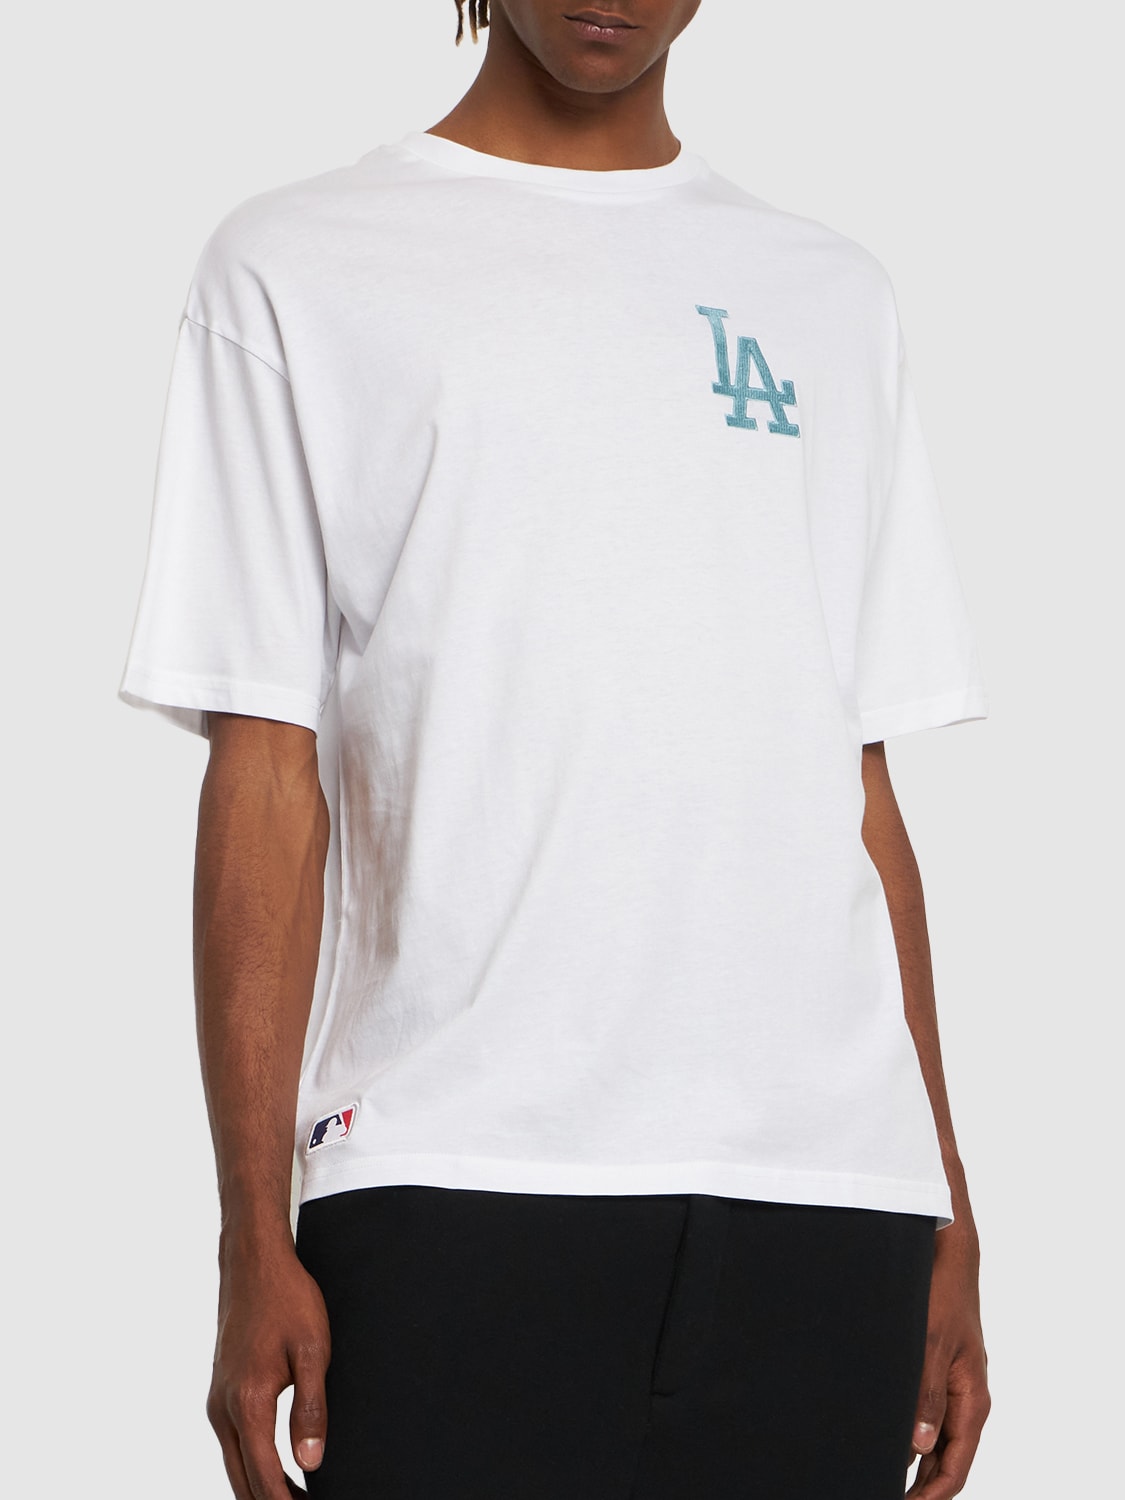 Dodger stadium printed cotton t-shirt - New Era - Men